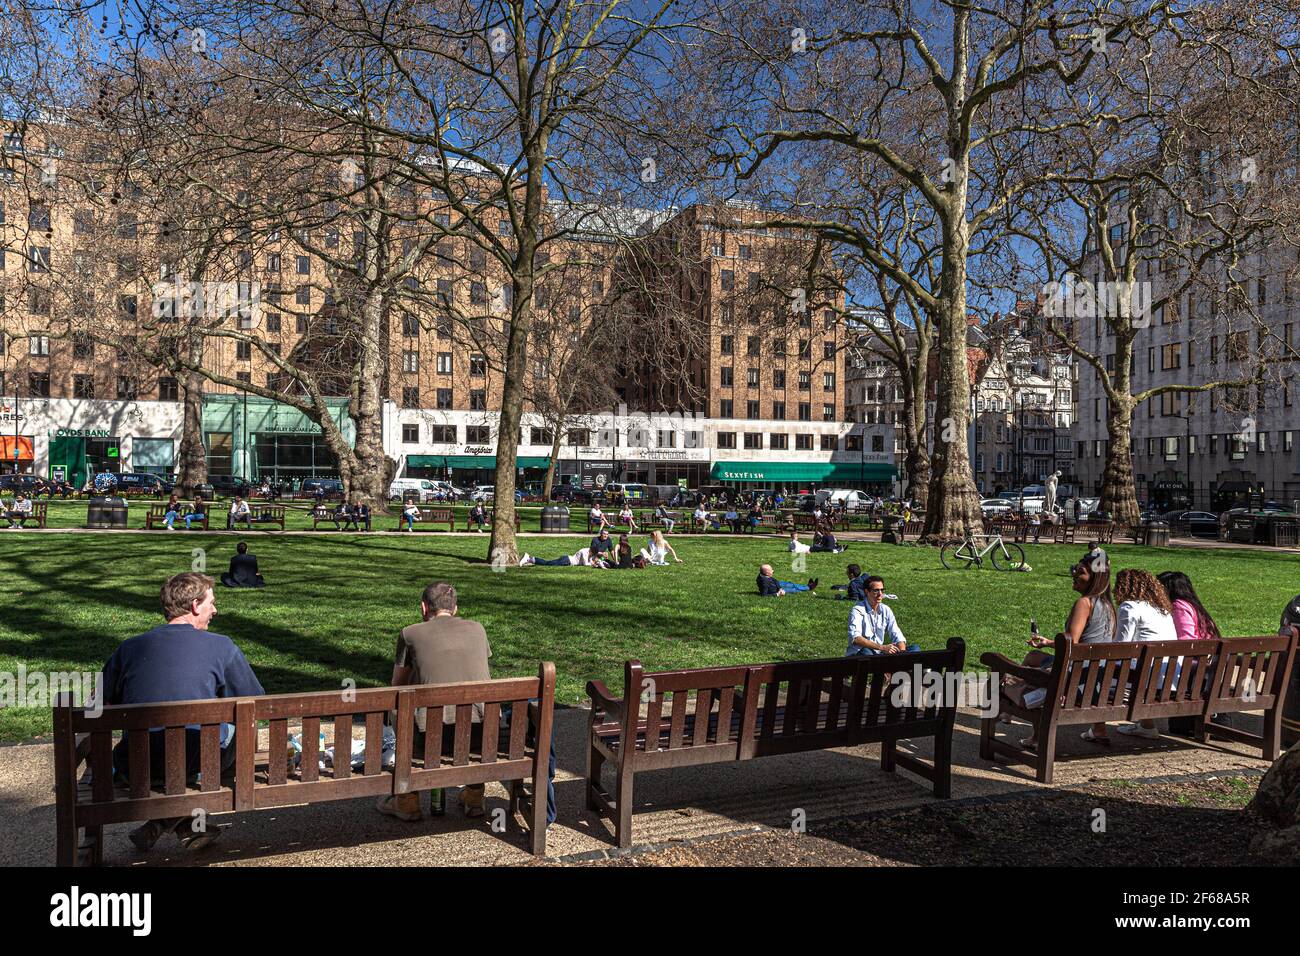 Berkeley Square, Mayfair, London W1J, England, UK. Stock Photo